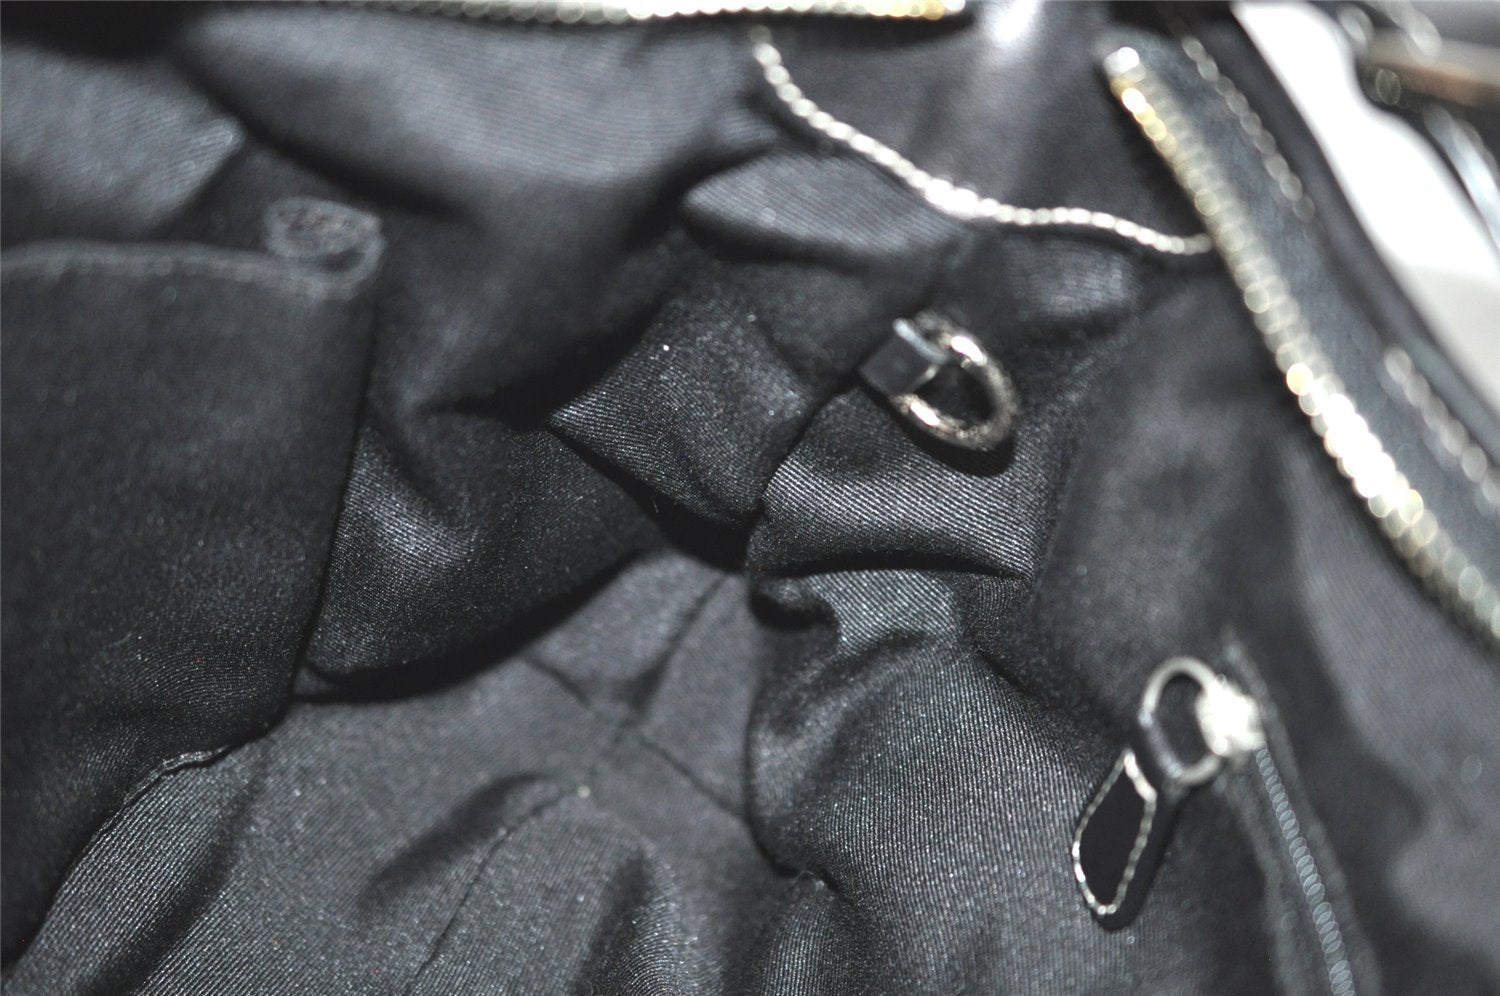 Authentic COACH Signature Shoulder Crossbody Bag Canvas Leather 7077 Black 2376I